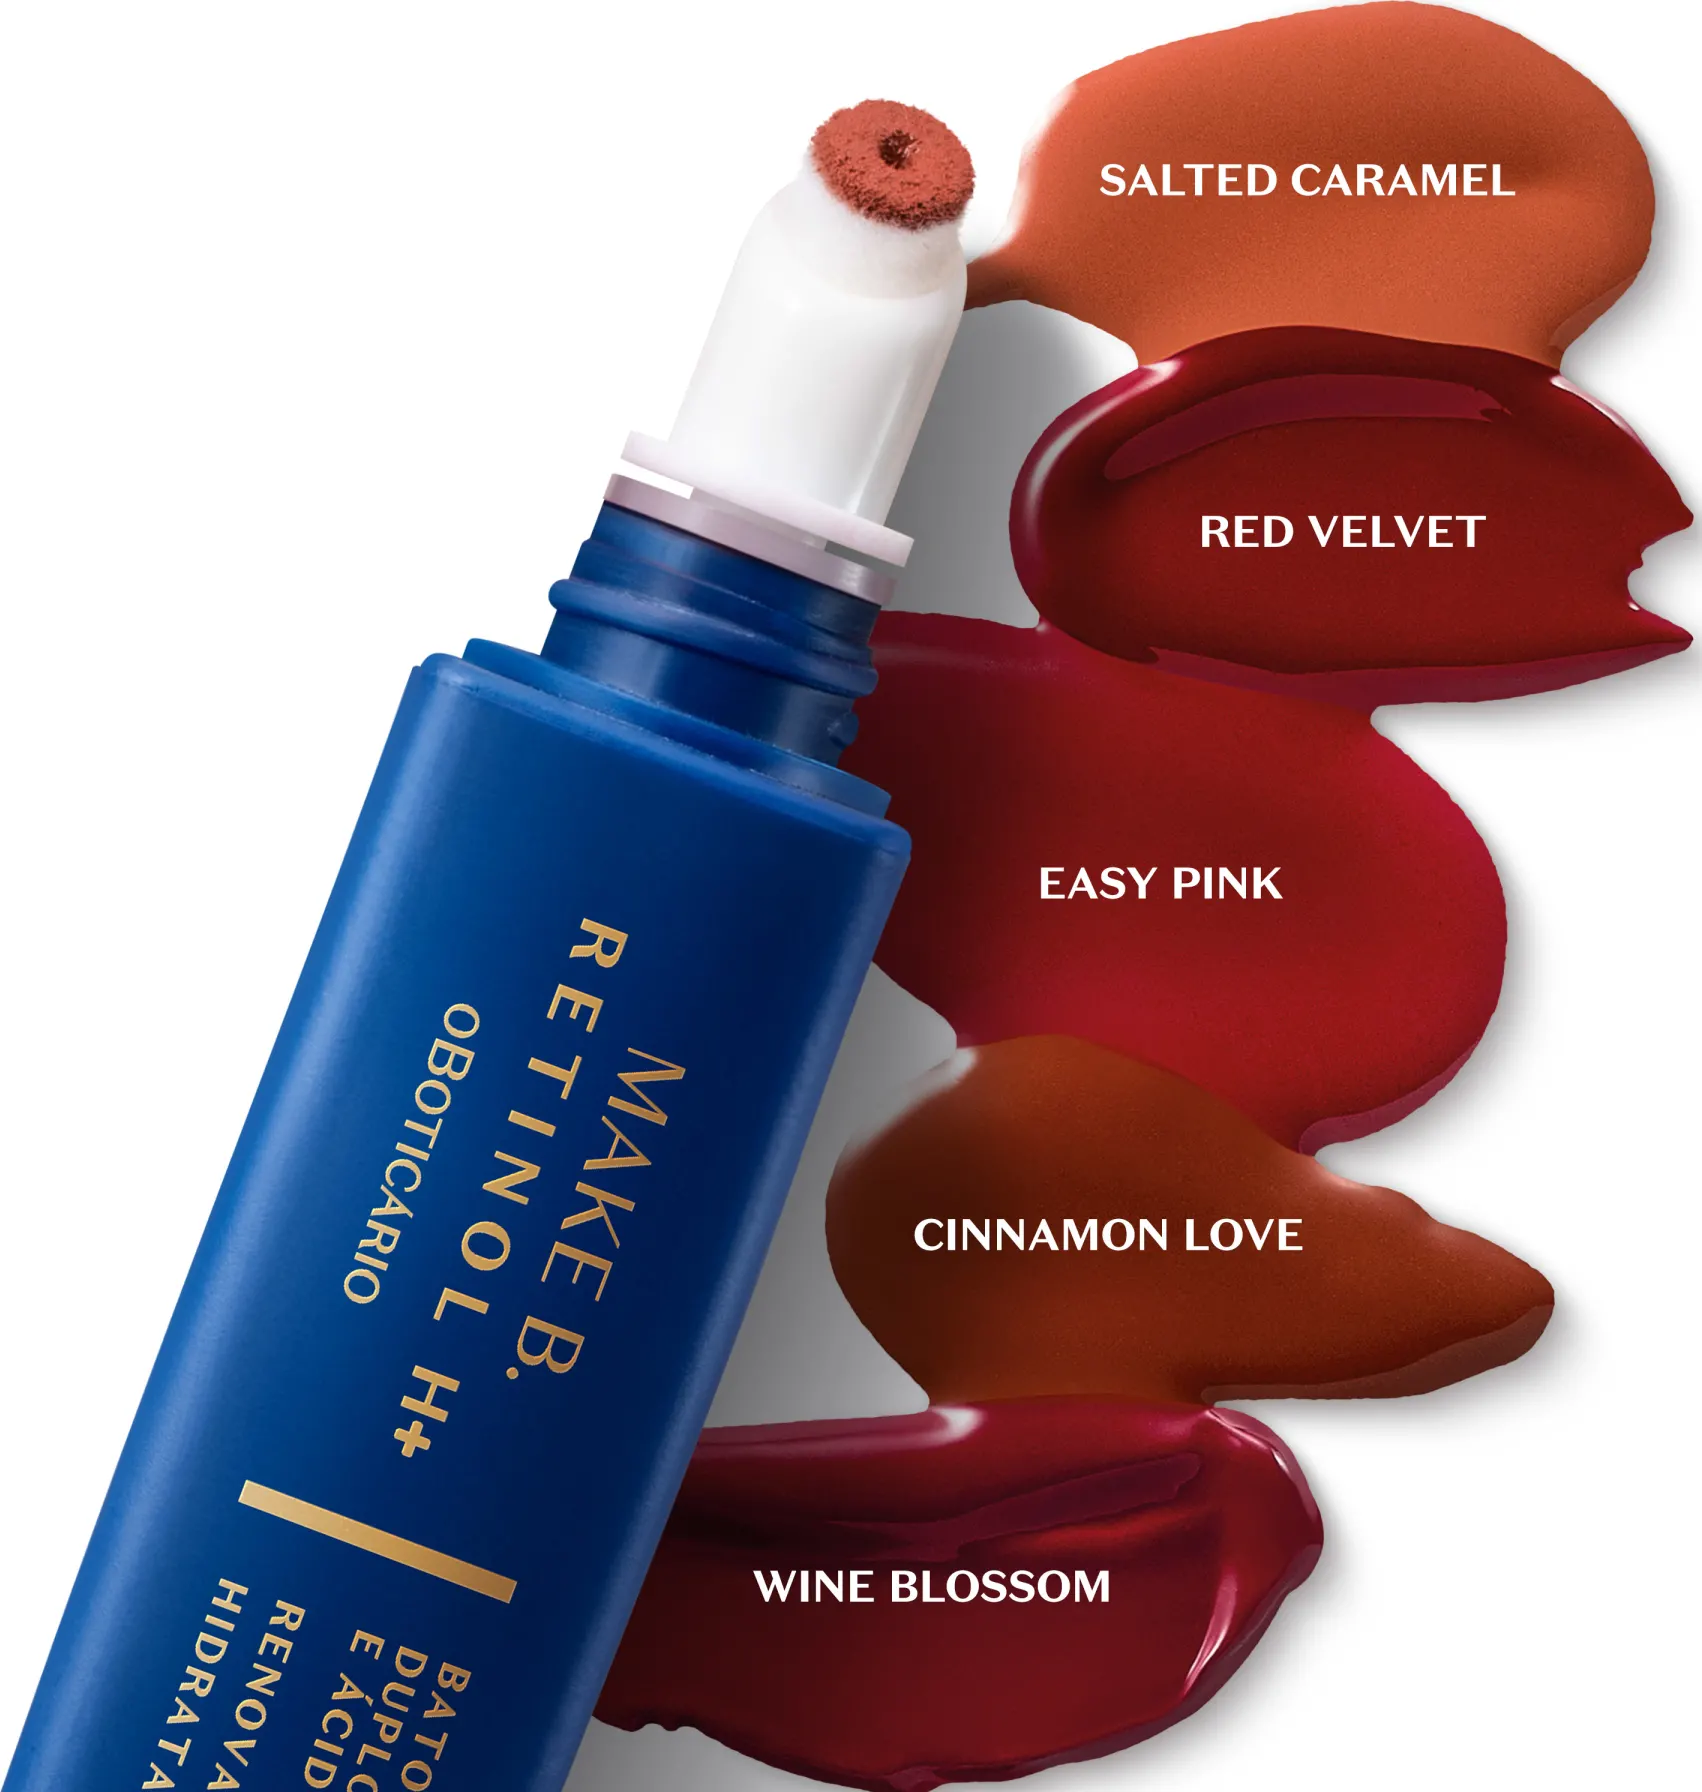 Make B. Retinol H+ Filler Liquid Lipstick 8ml